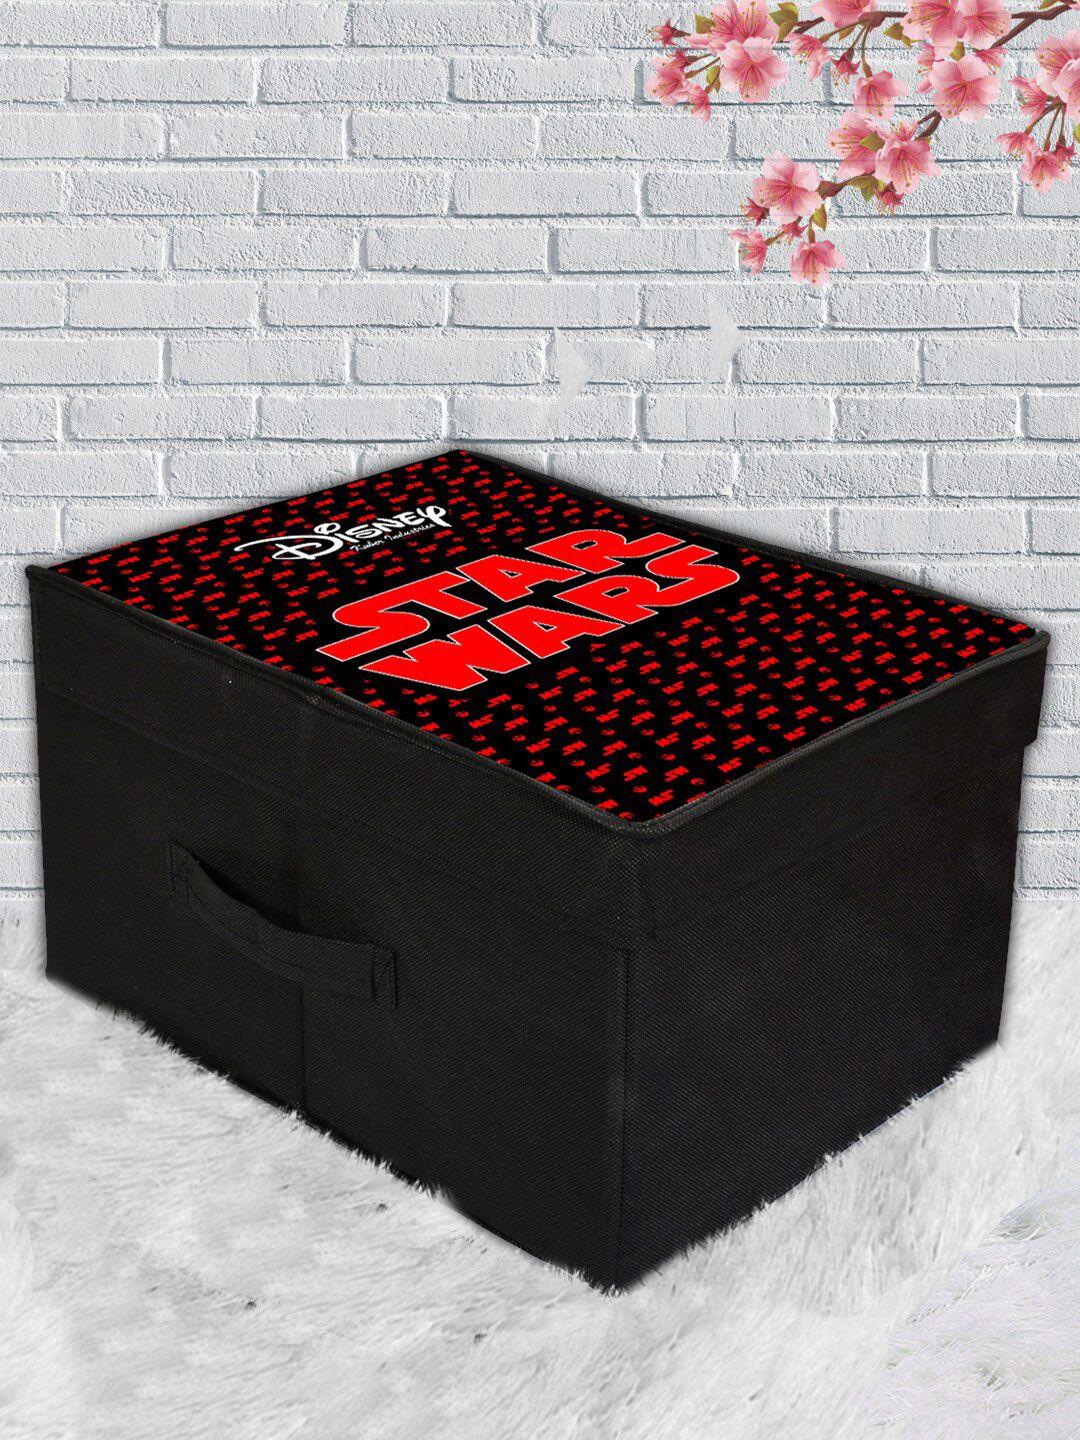 kuber industries black disney star wars print foldable storage organizer box with lid